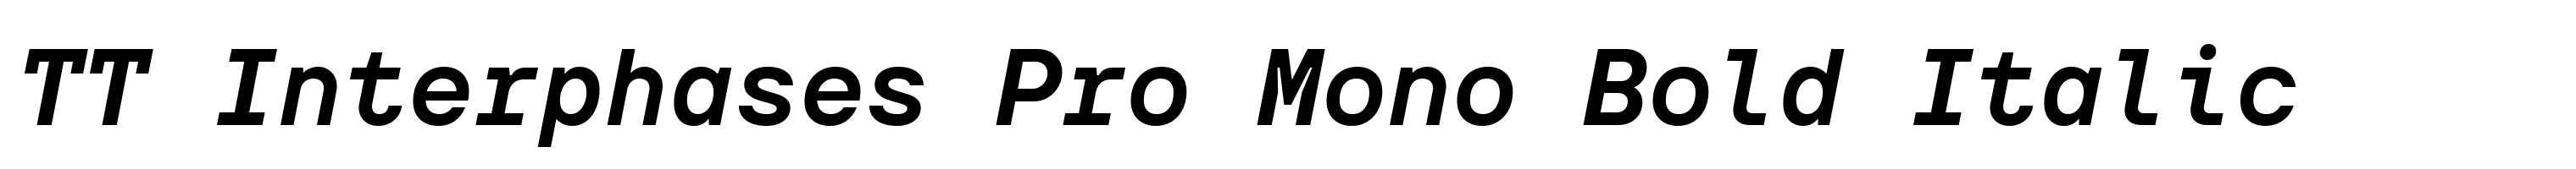 TT Interphases Pro Mono Bold Italic